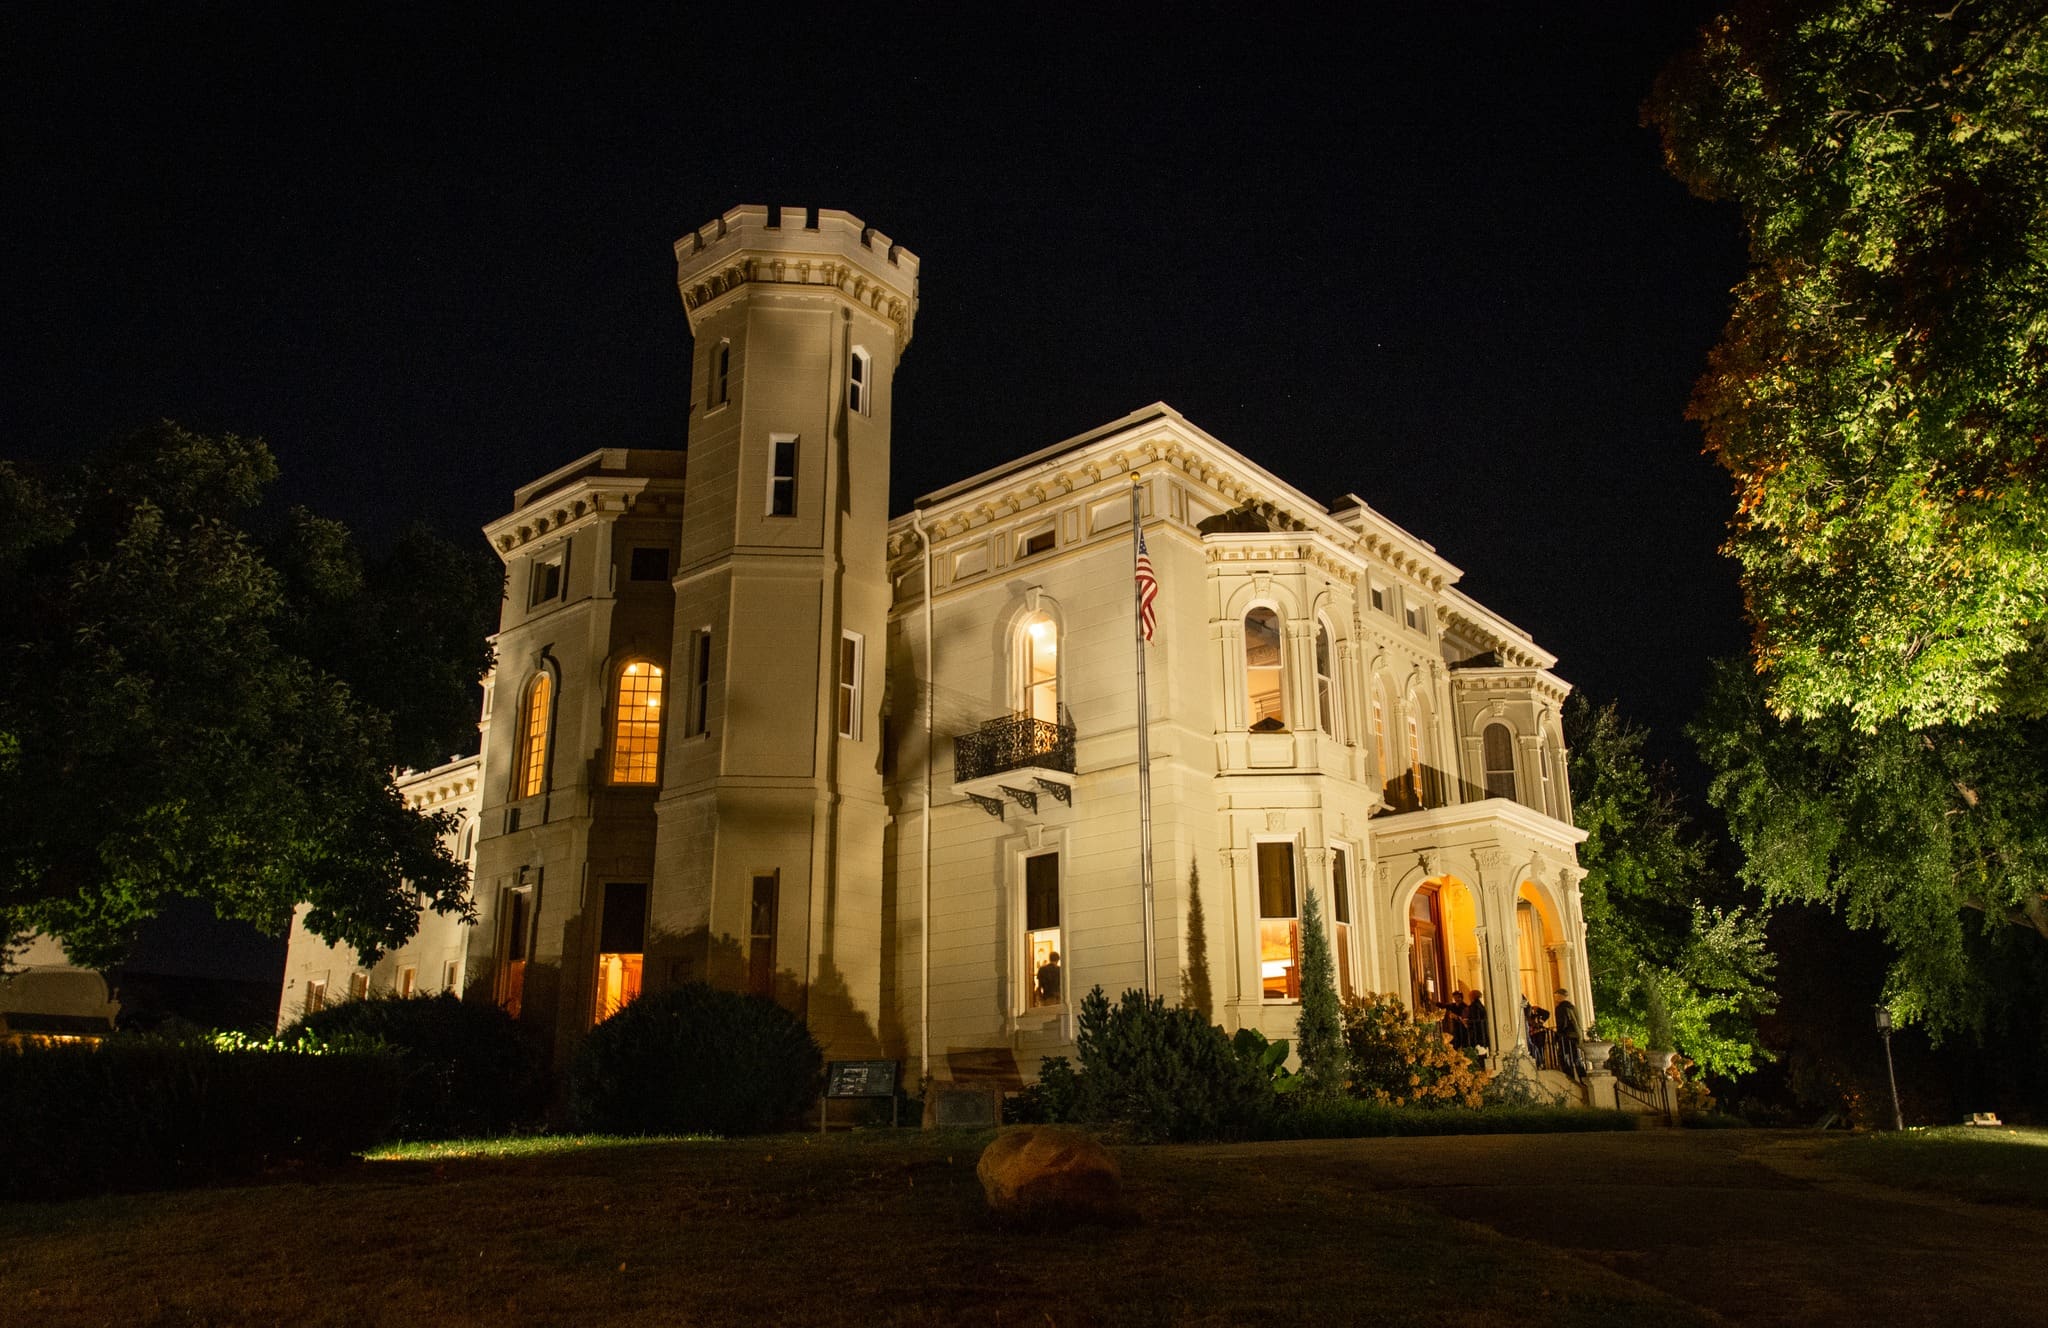 Wyeth-Tootle Mansion – St. Joseph, Missouri